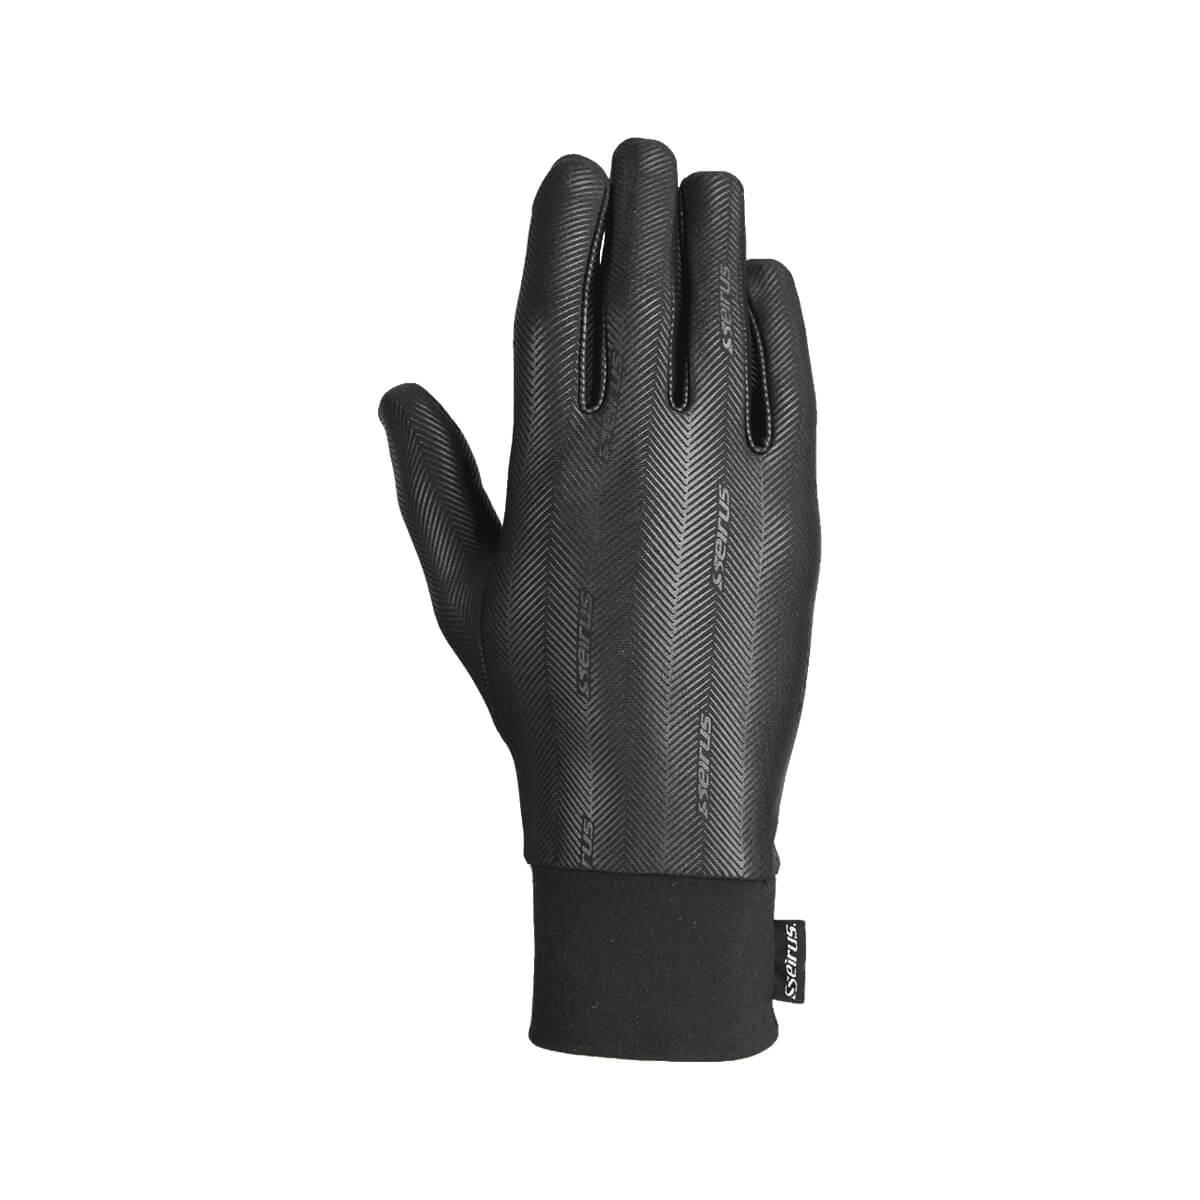  Heatwave Soundtouch Glove Liner